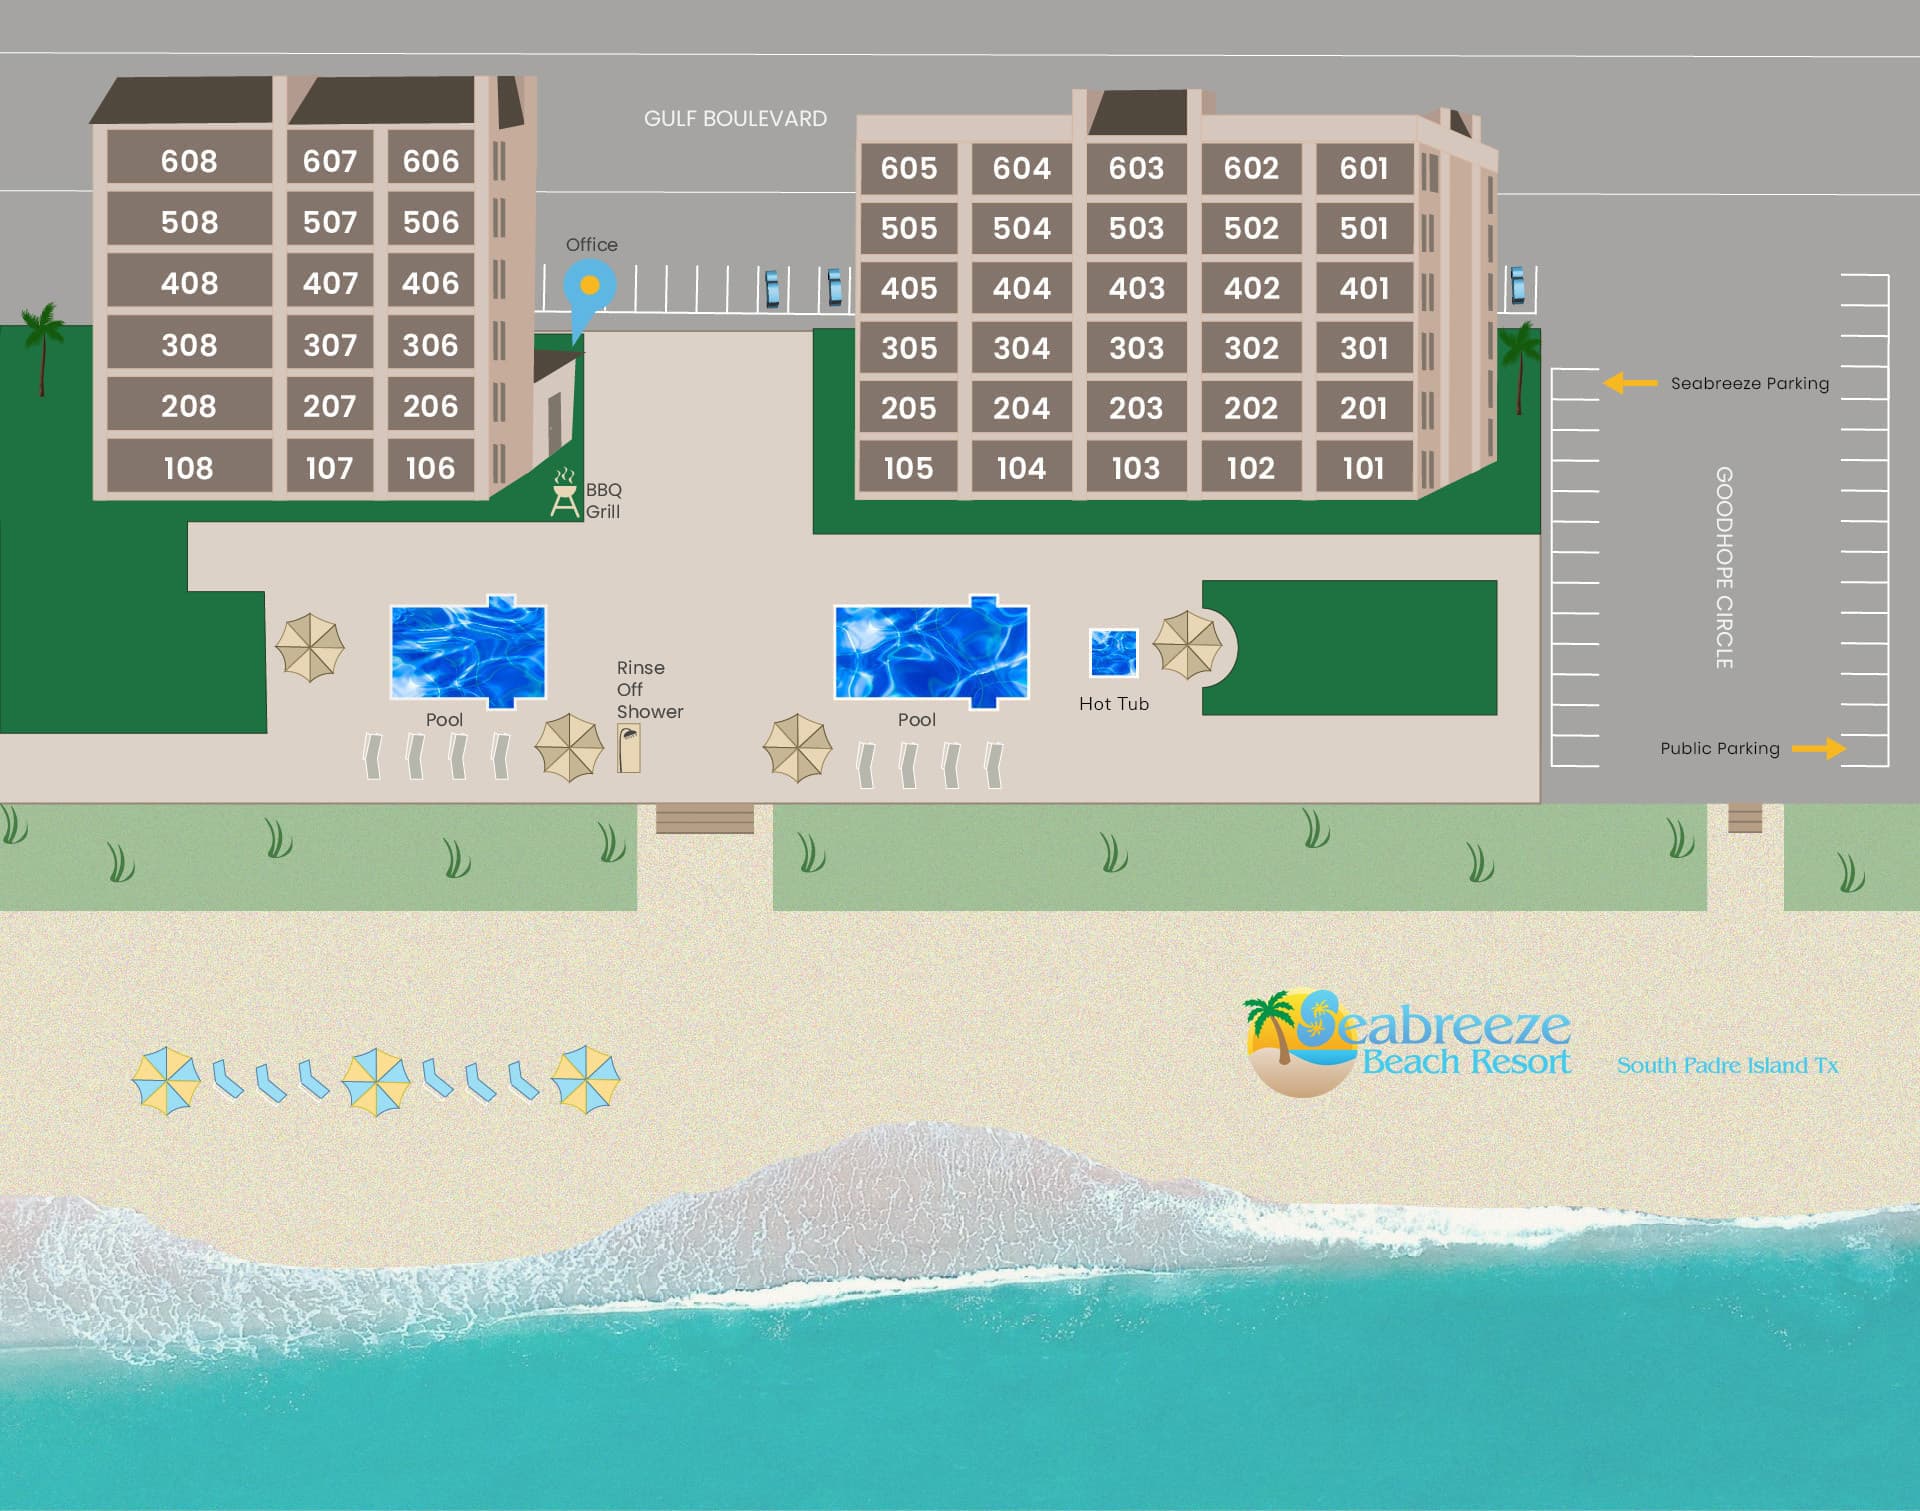 Seabreeze Beach Resort map